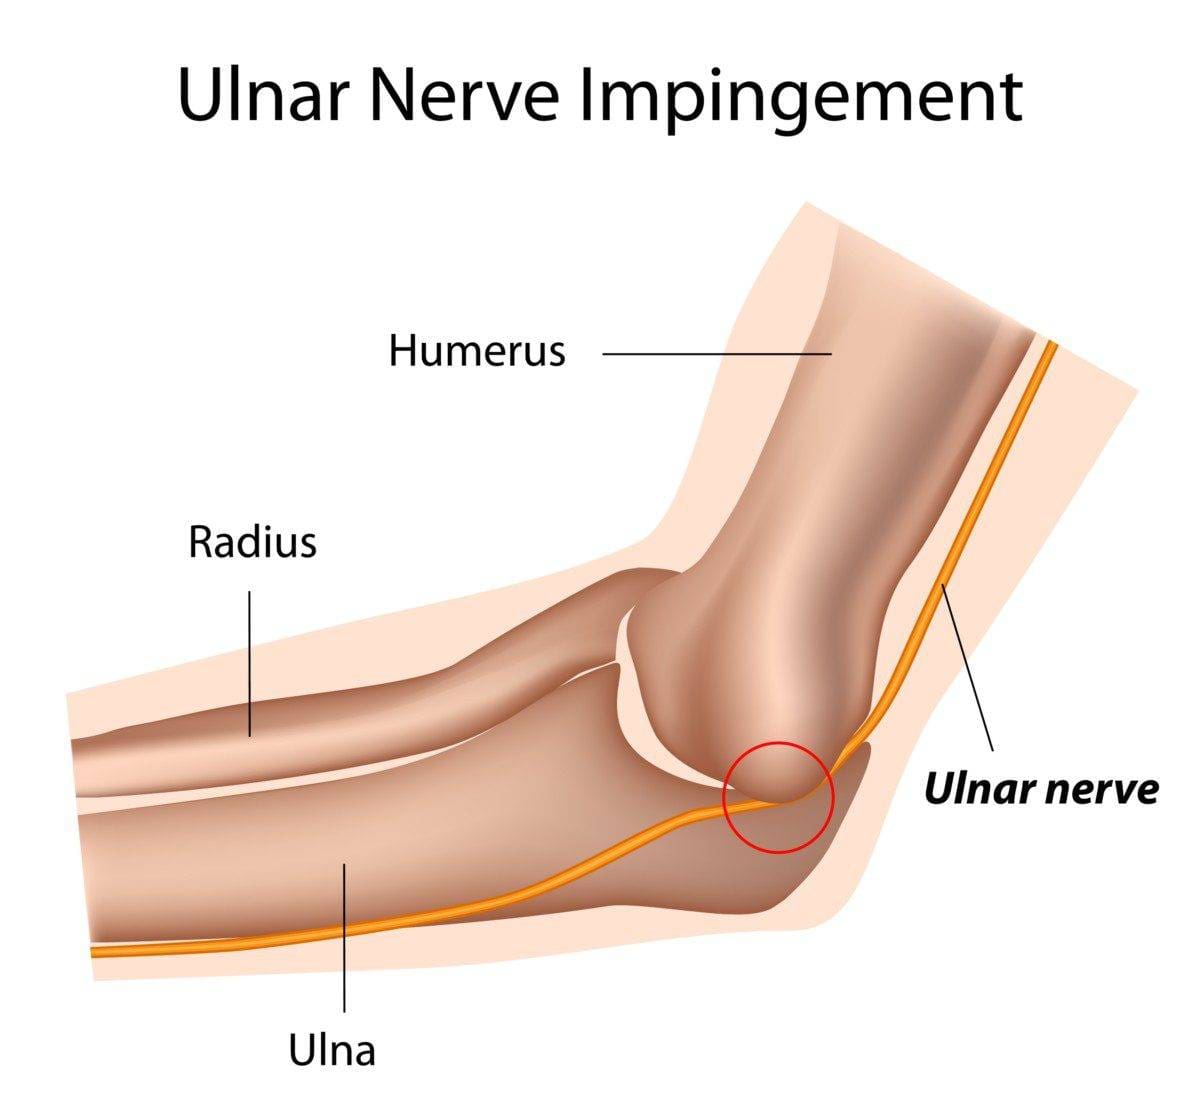 a diagram of the ulnar nerve